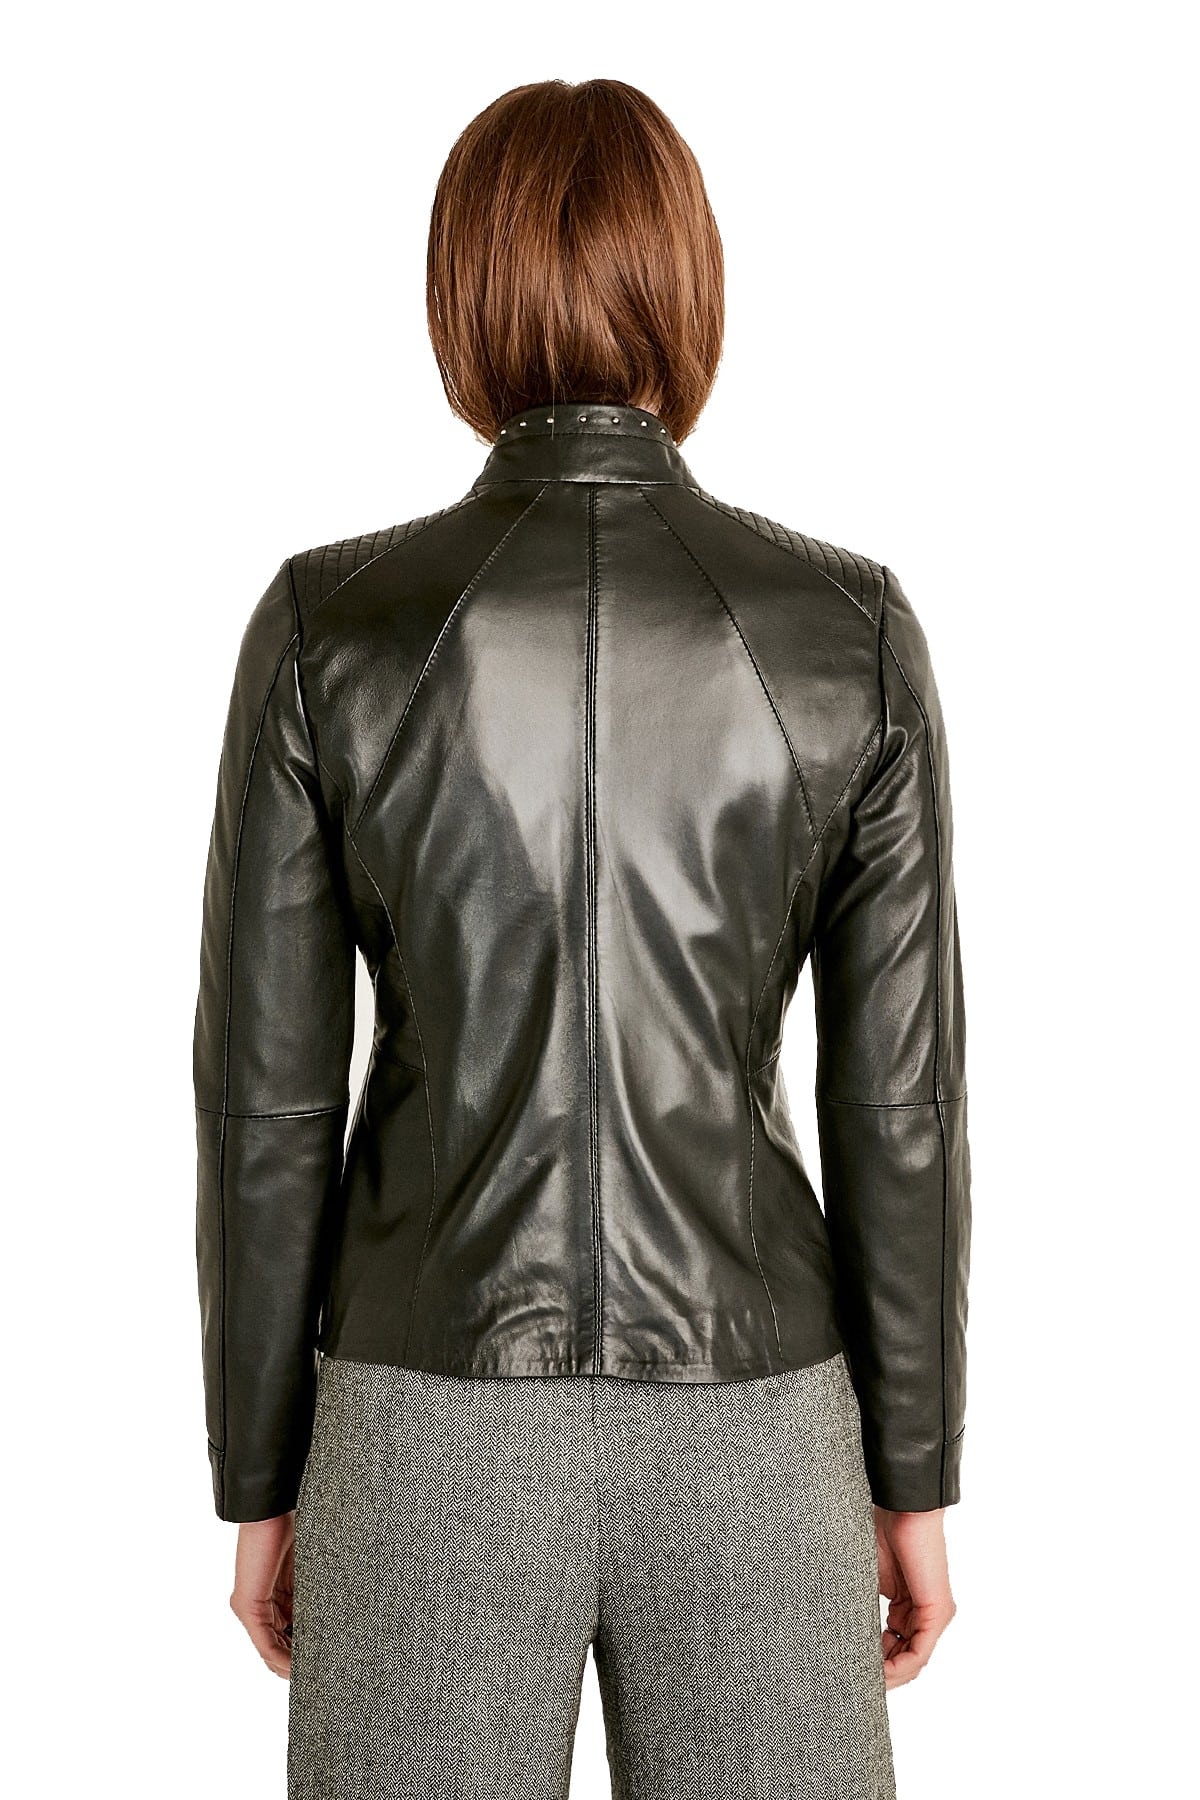 shiny black leather jacket for ladies 2